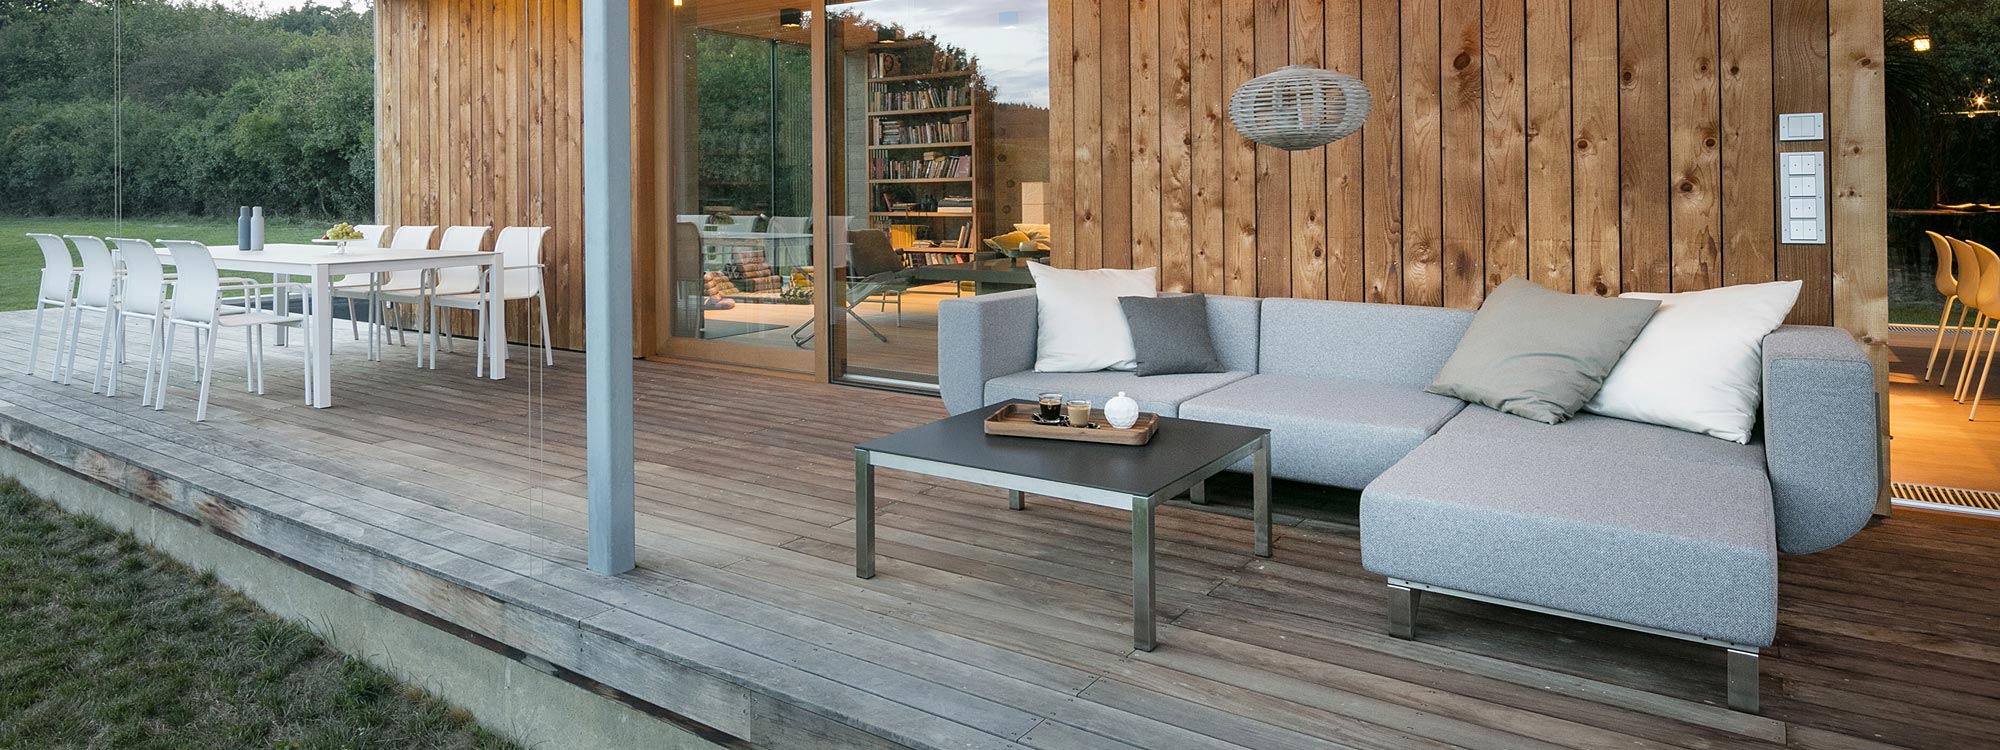 Image of Lotos garden sofa and Puro garden dining set on wooden decking